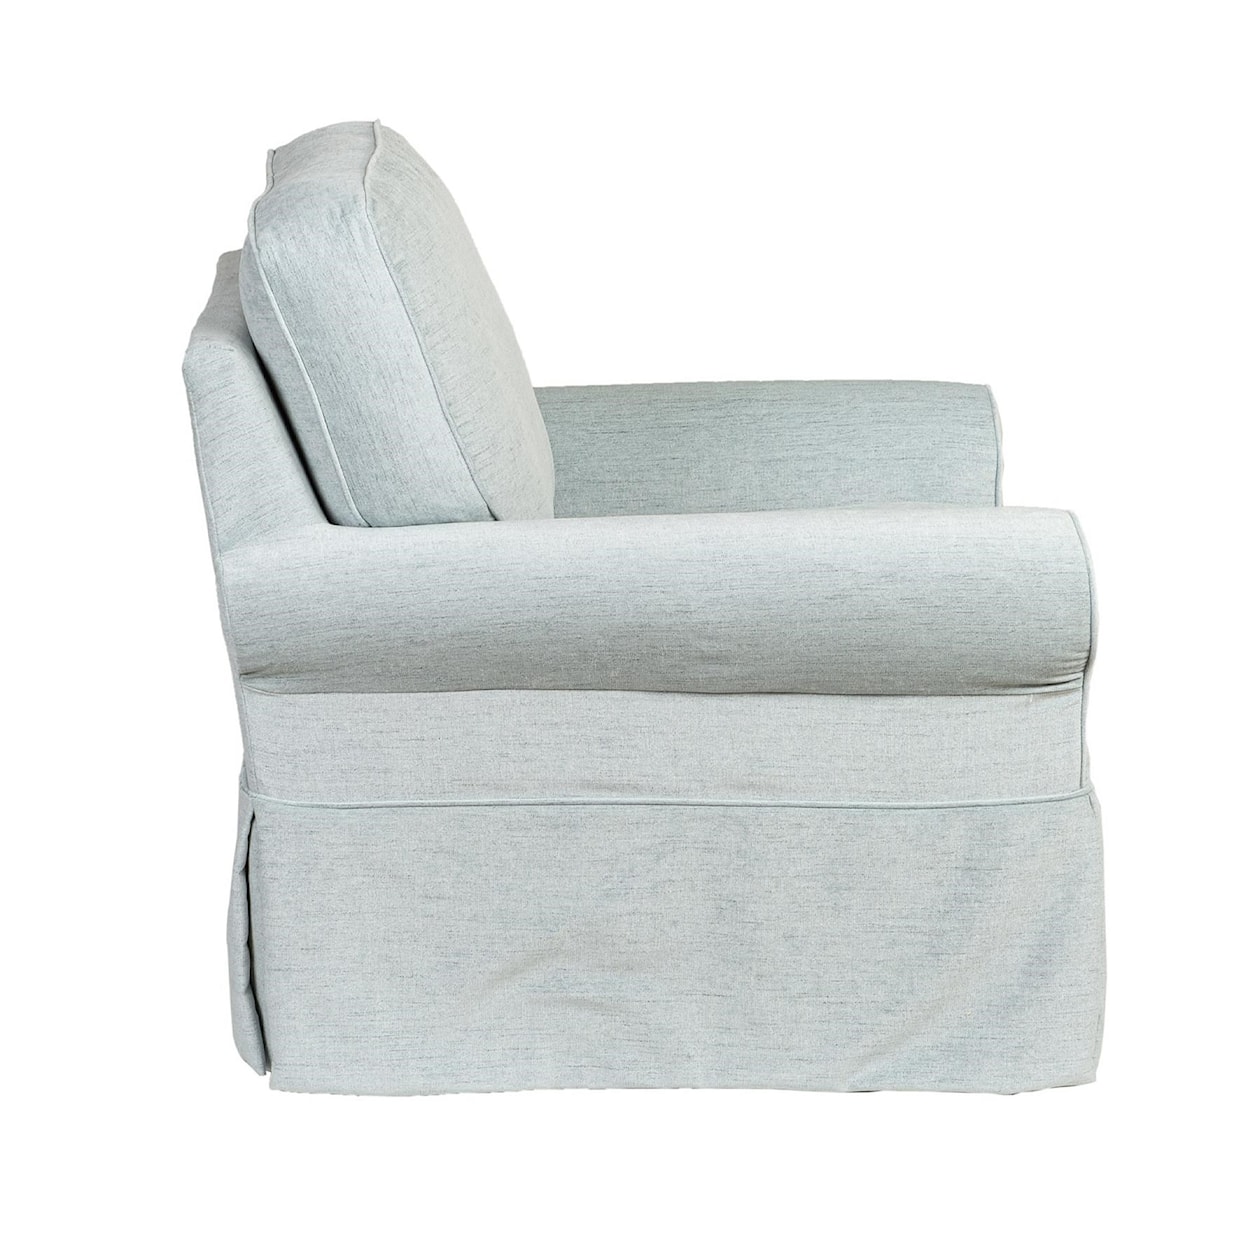 Sarah Randolph Designs 1149 Upholstered Chair